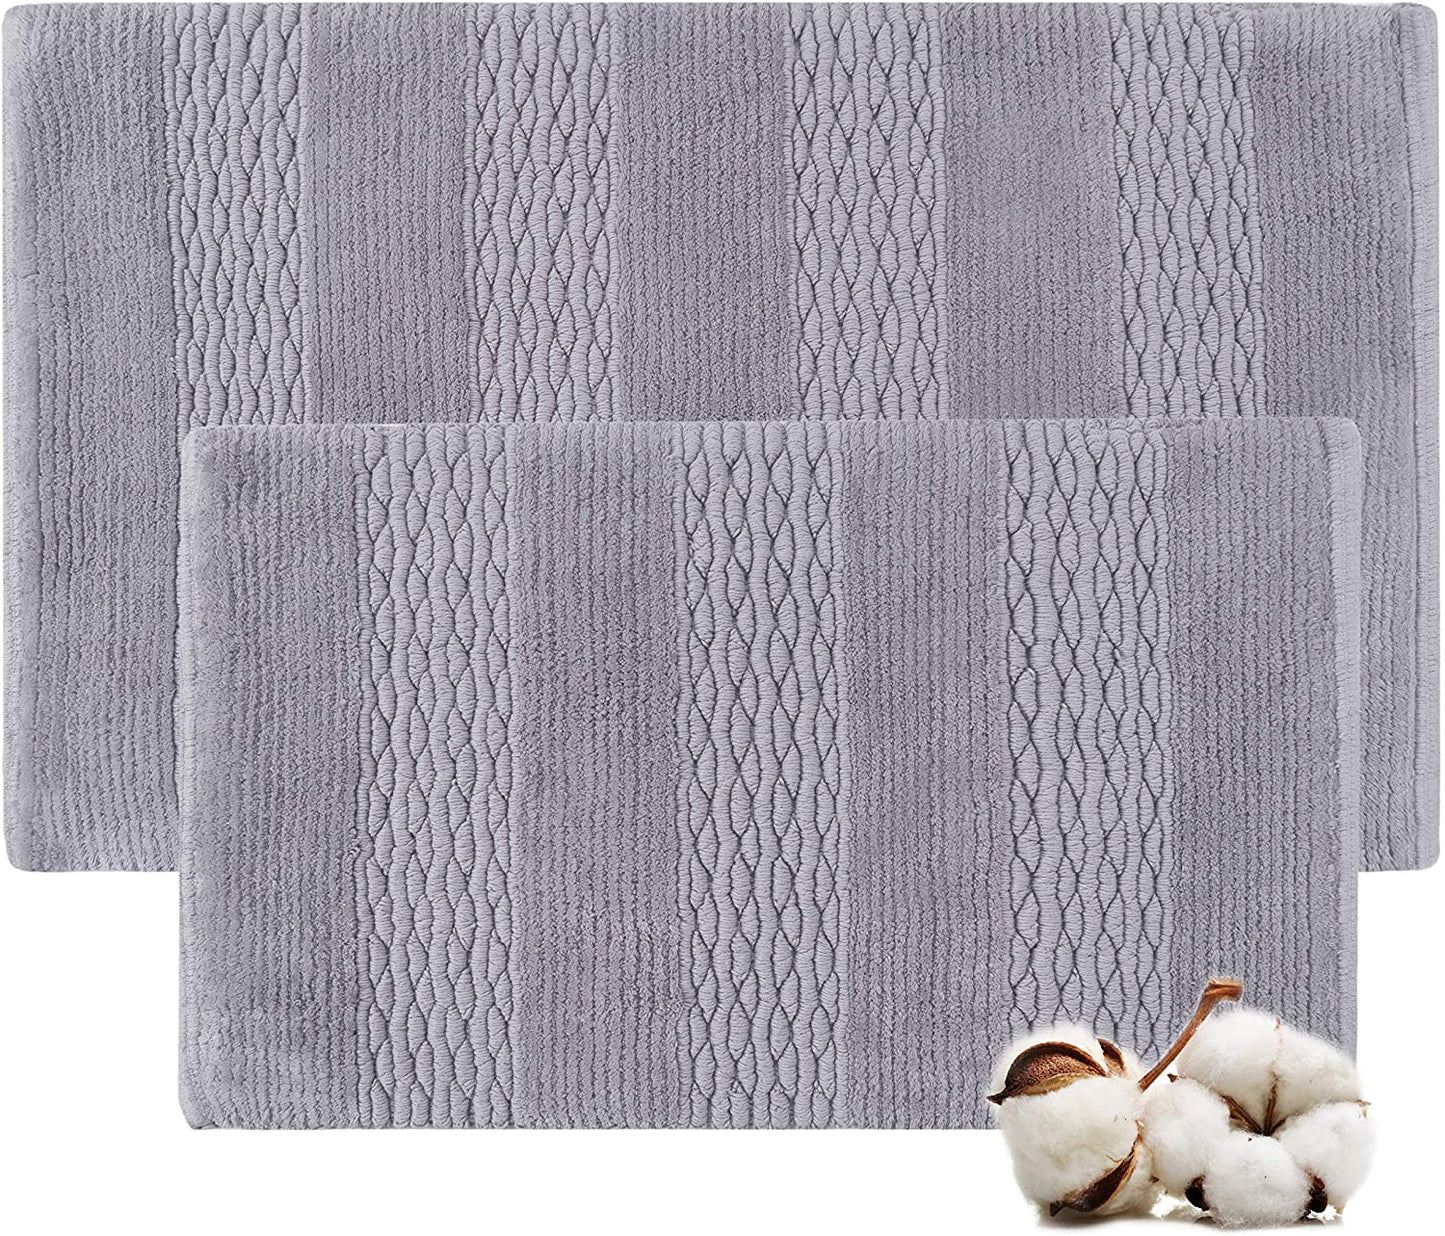 Cotton bath rugs water absorbent stripe design bathmat set of 2 - TreeWool Bathrugs#color_grey